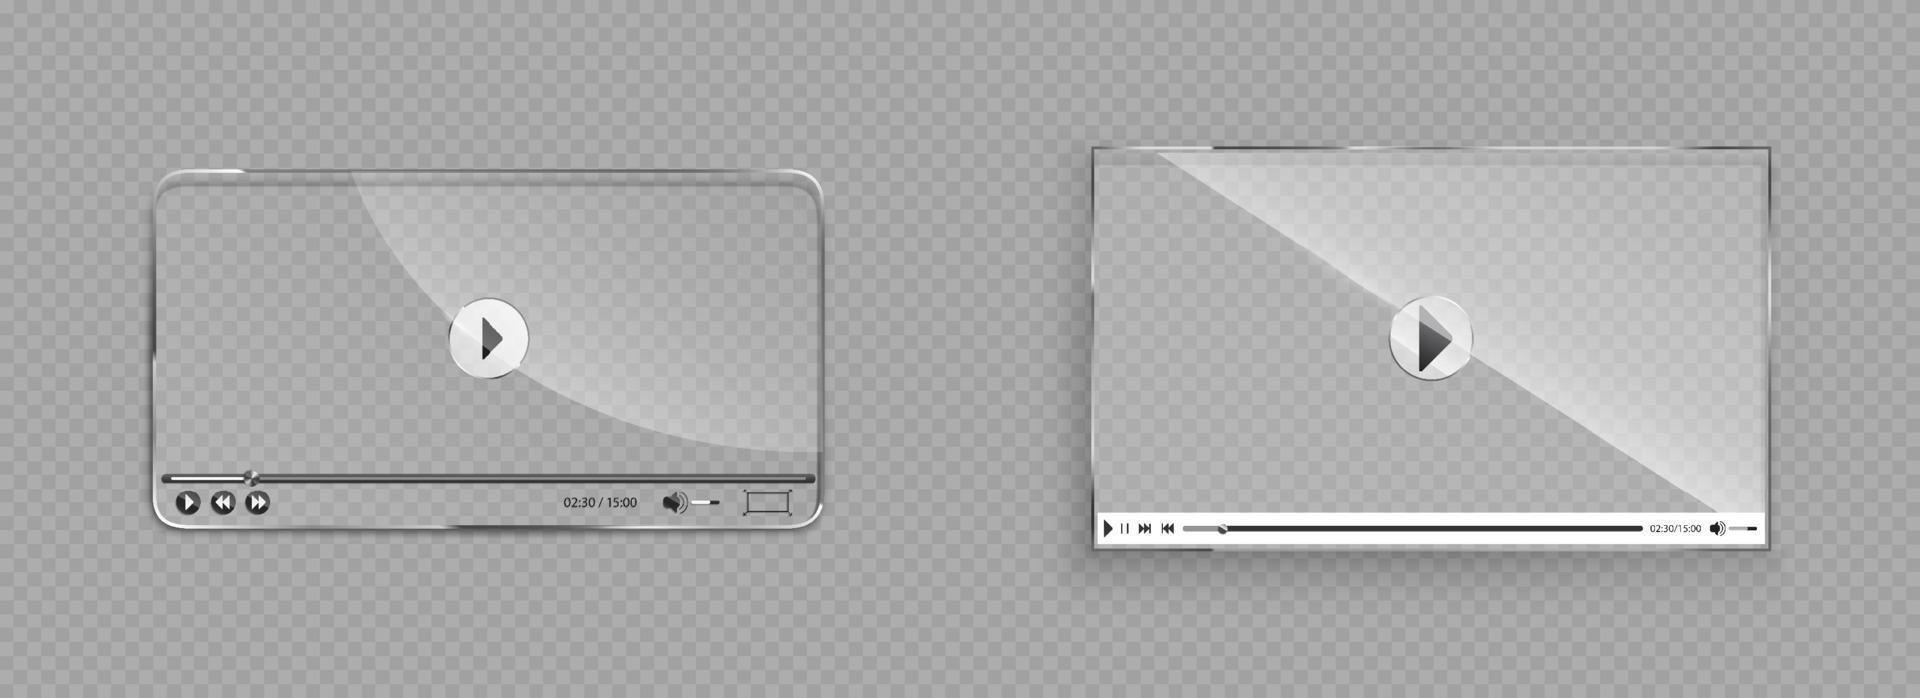 interfaz de reproductor de video de vidrio, ventana transparente vector